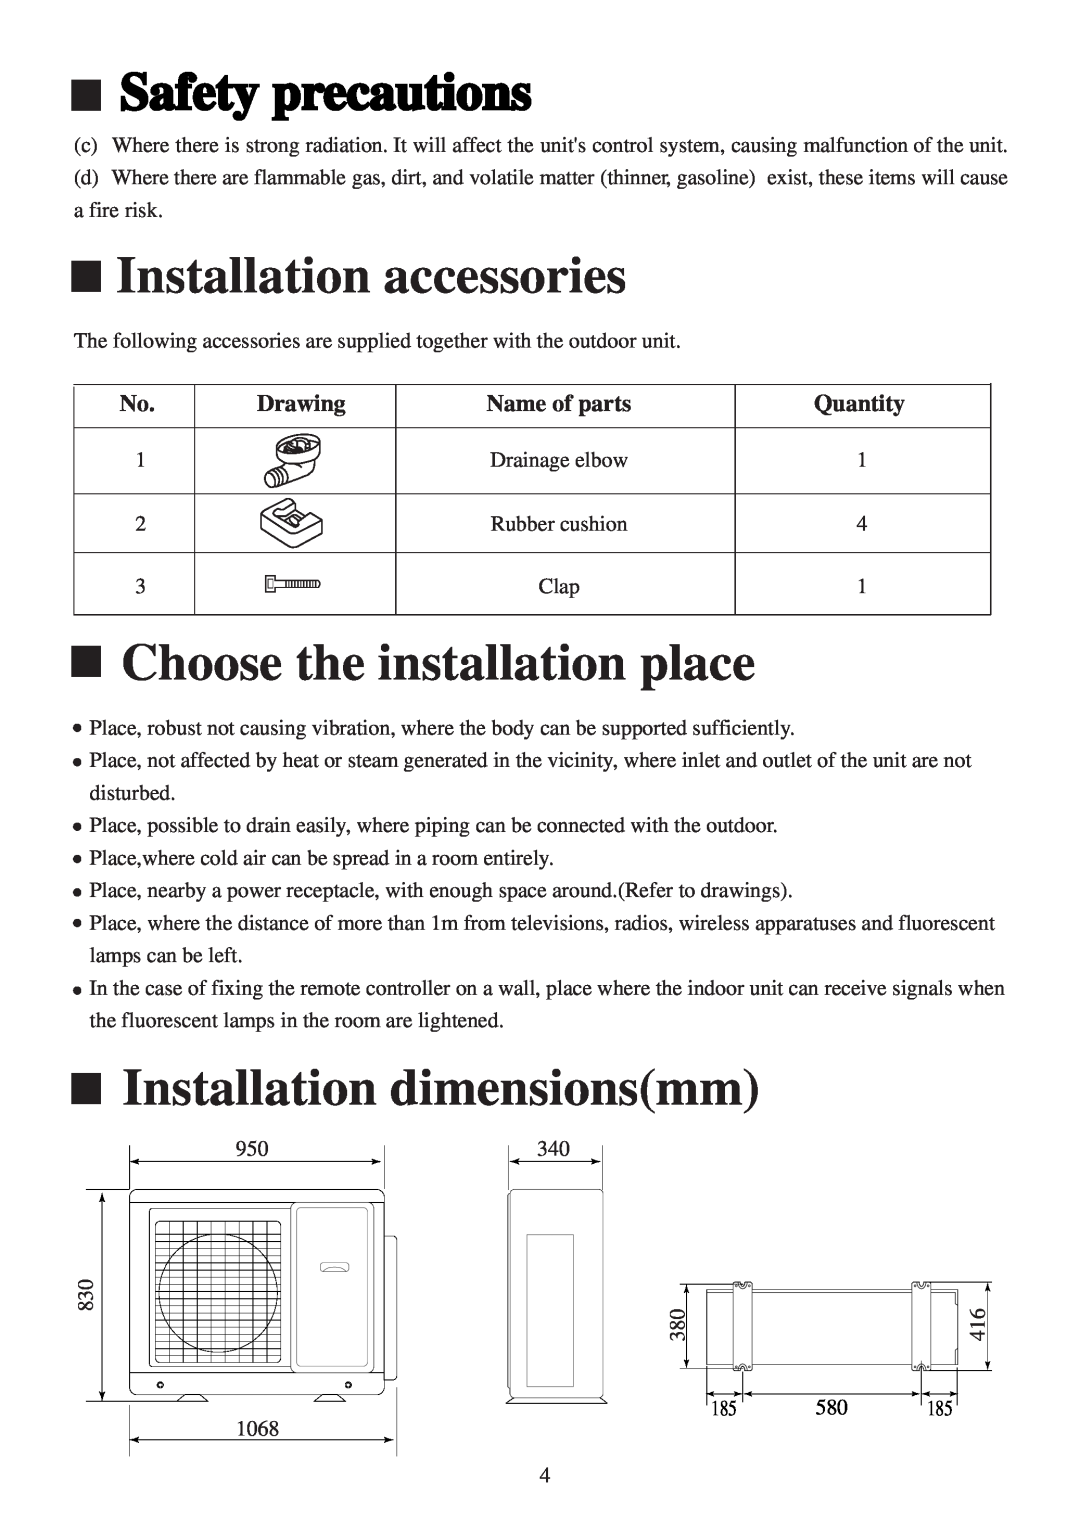 Haier AU282XHERA Installation accessories, Choose the installation place, Installation dimensionsmm, Drawing, Quantity 